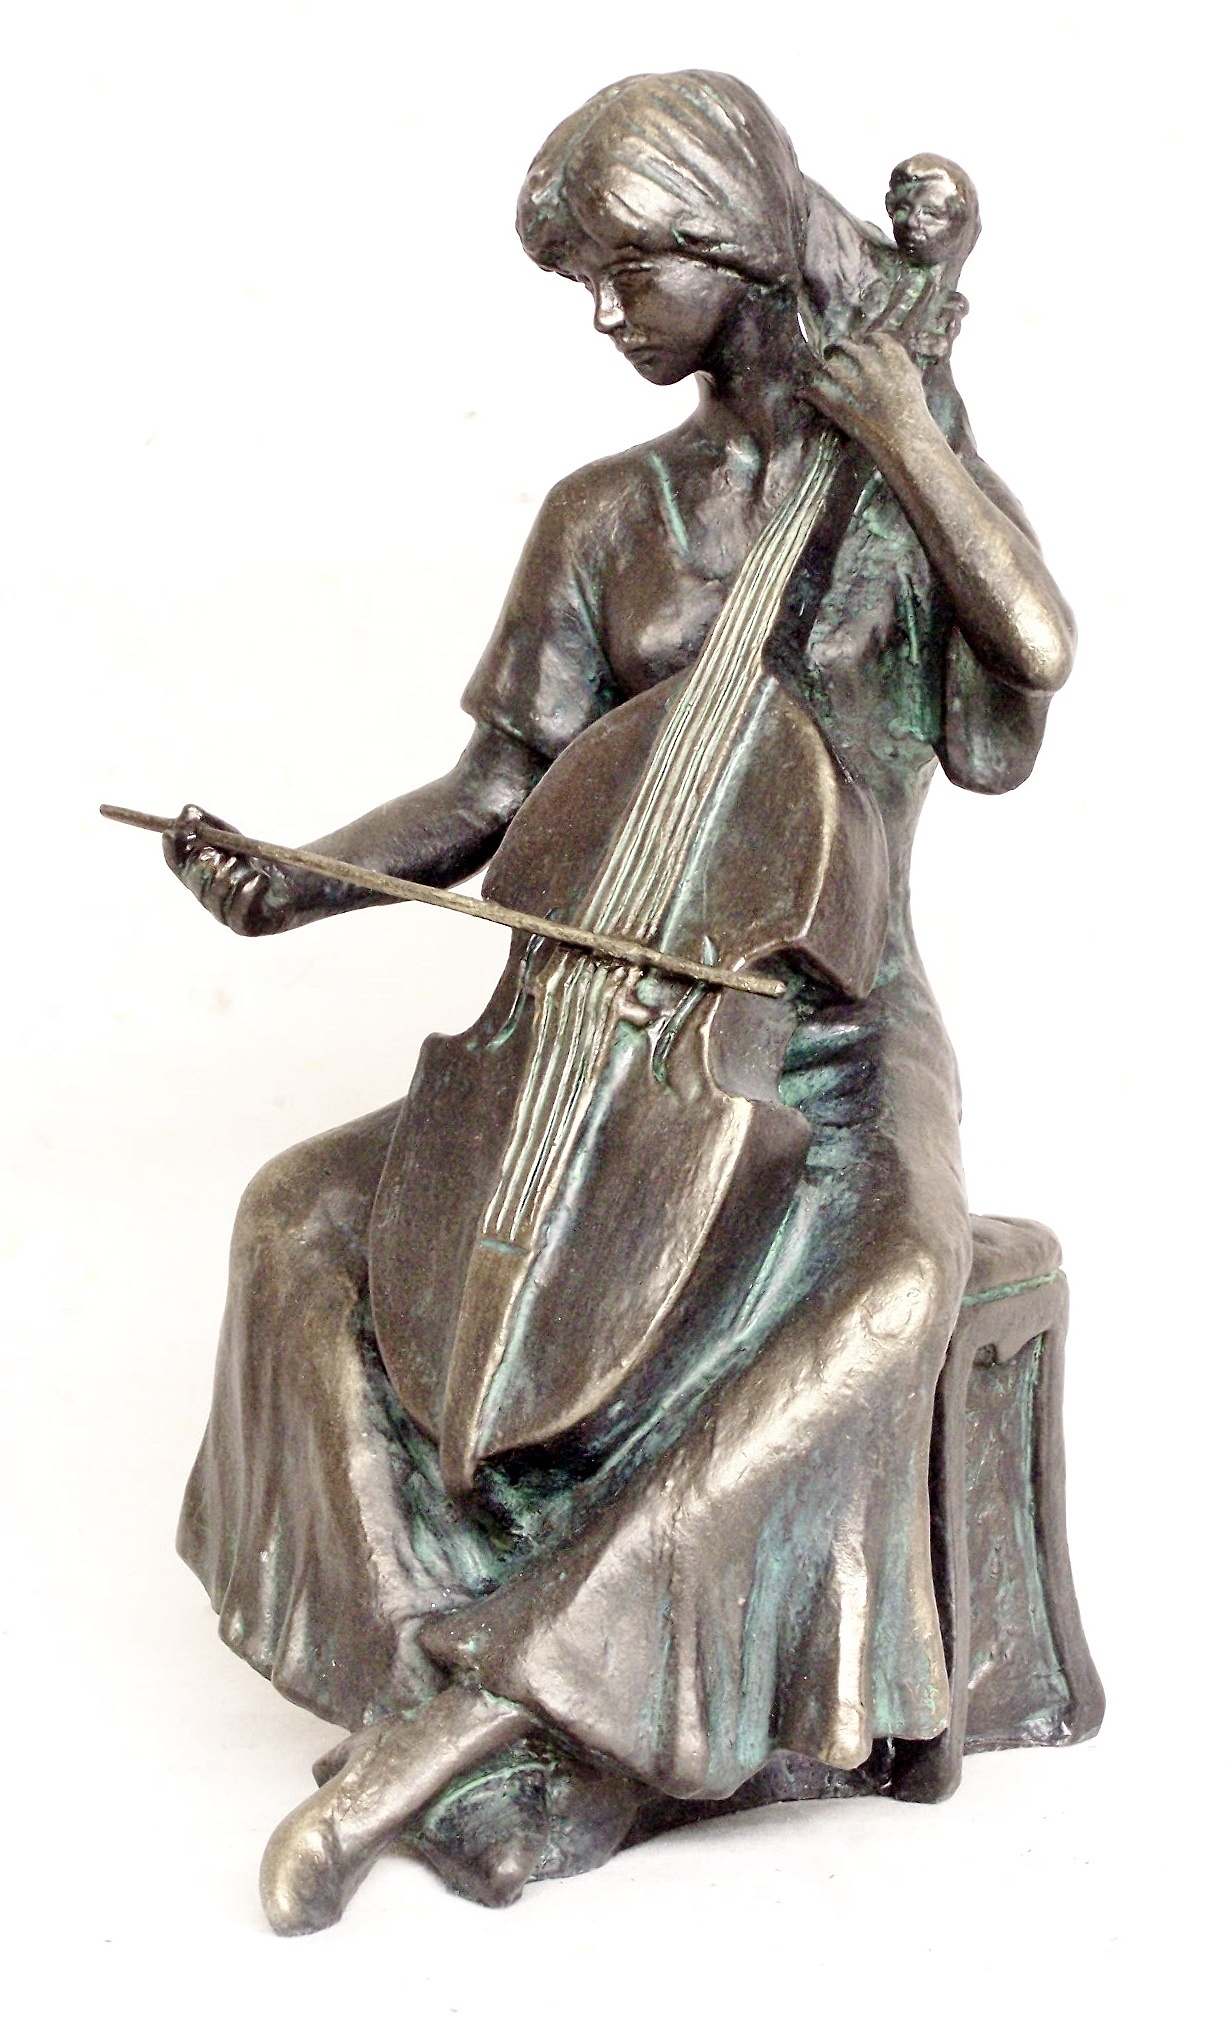 Viola da Gamba: Bronze Statue, Playing The Viol, Violinist, Art, Sculpture. 1230x2020 HD Wallpaper.